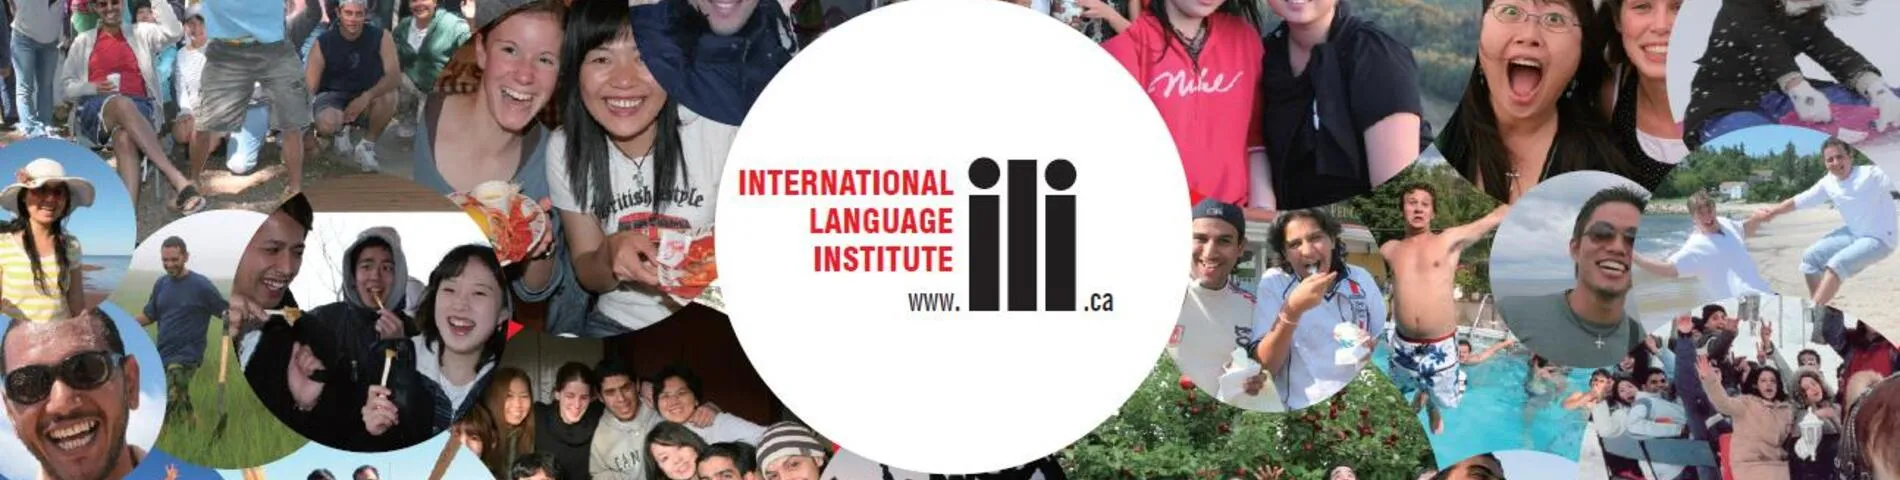 ILI - International Language Institute bilde 1